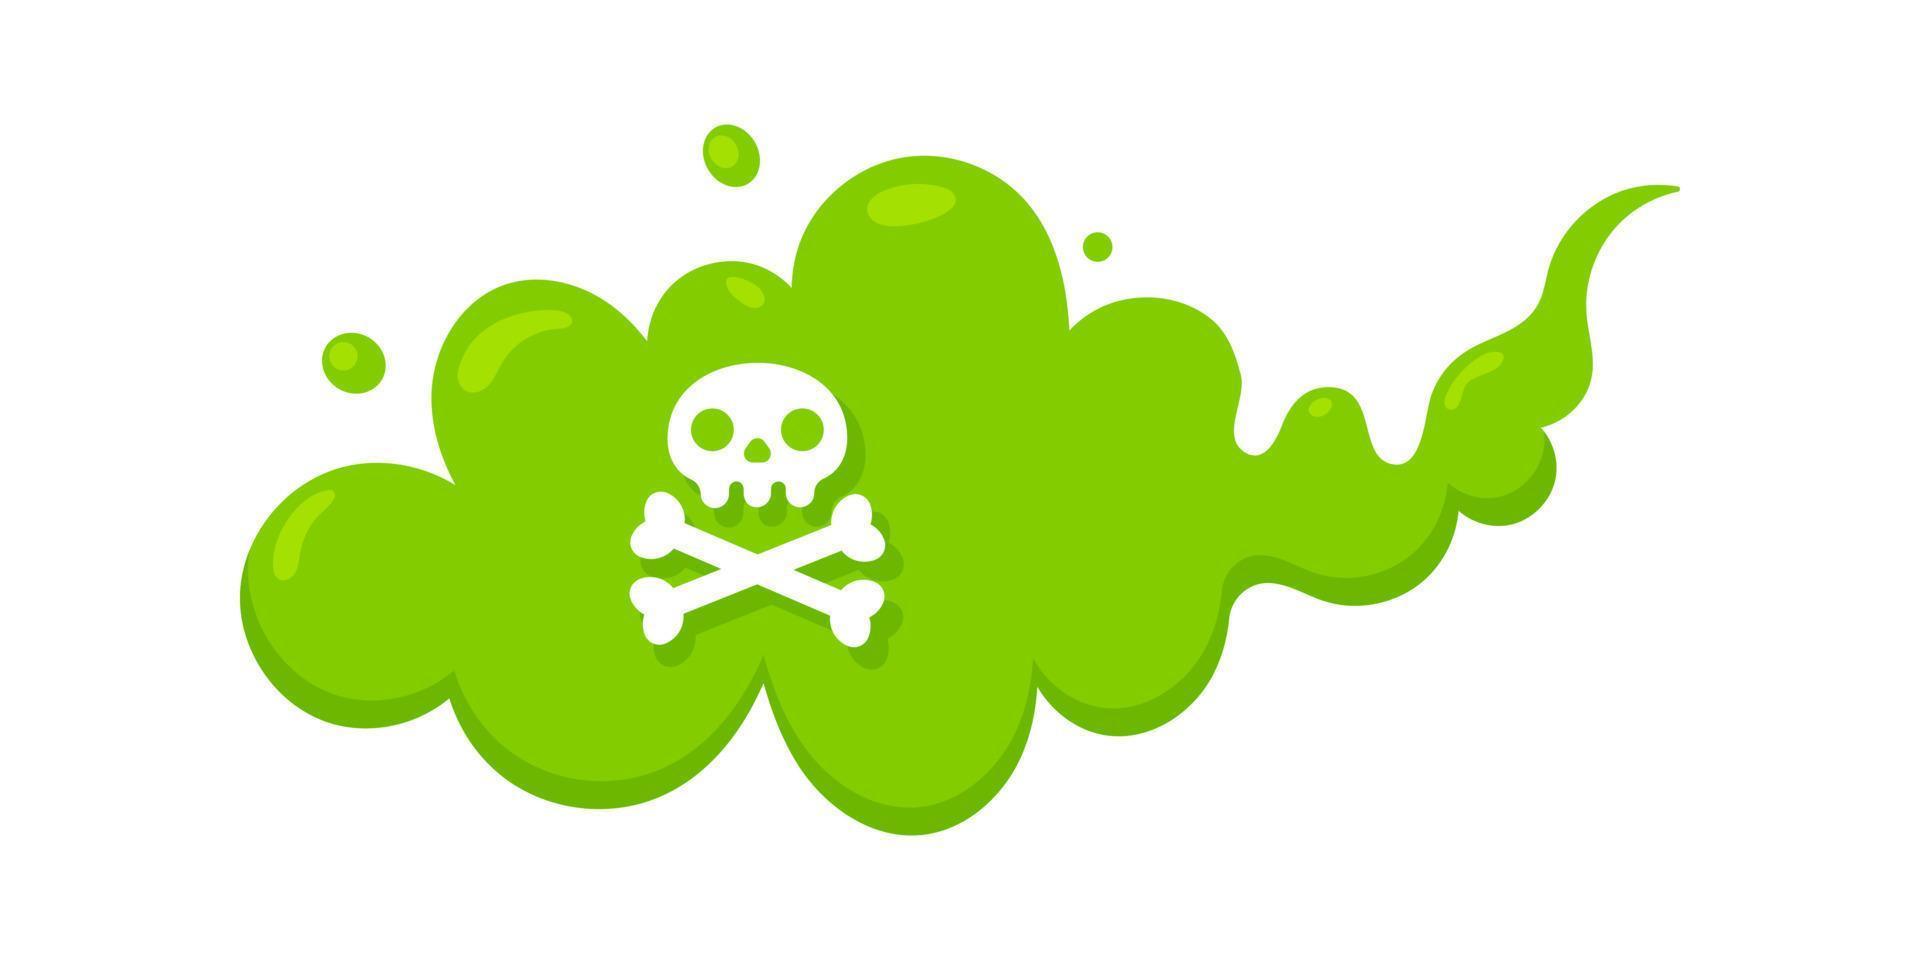 Smelling green cartoon fart cloud flat style design vector illustration with crossbone skull.